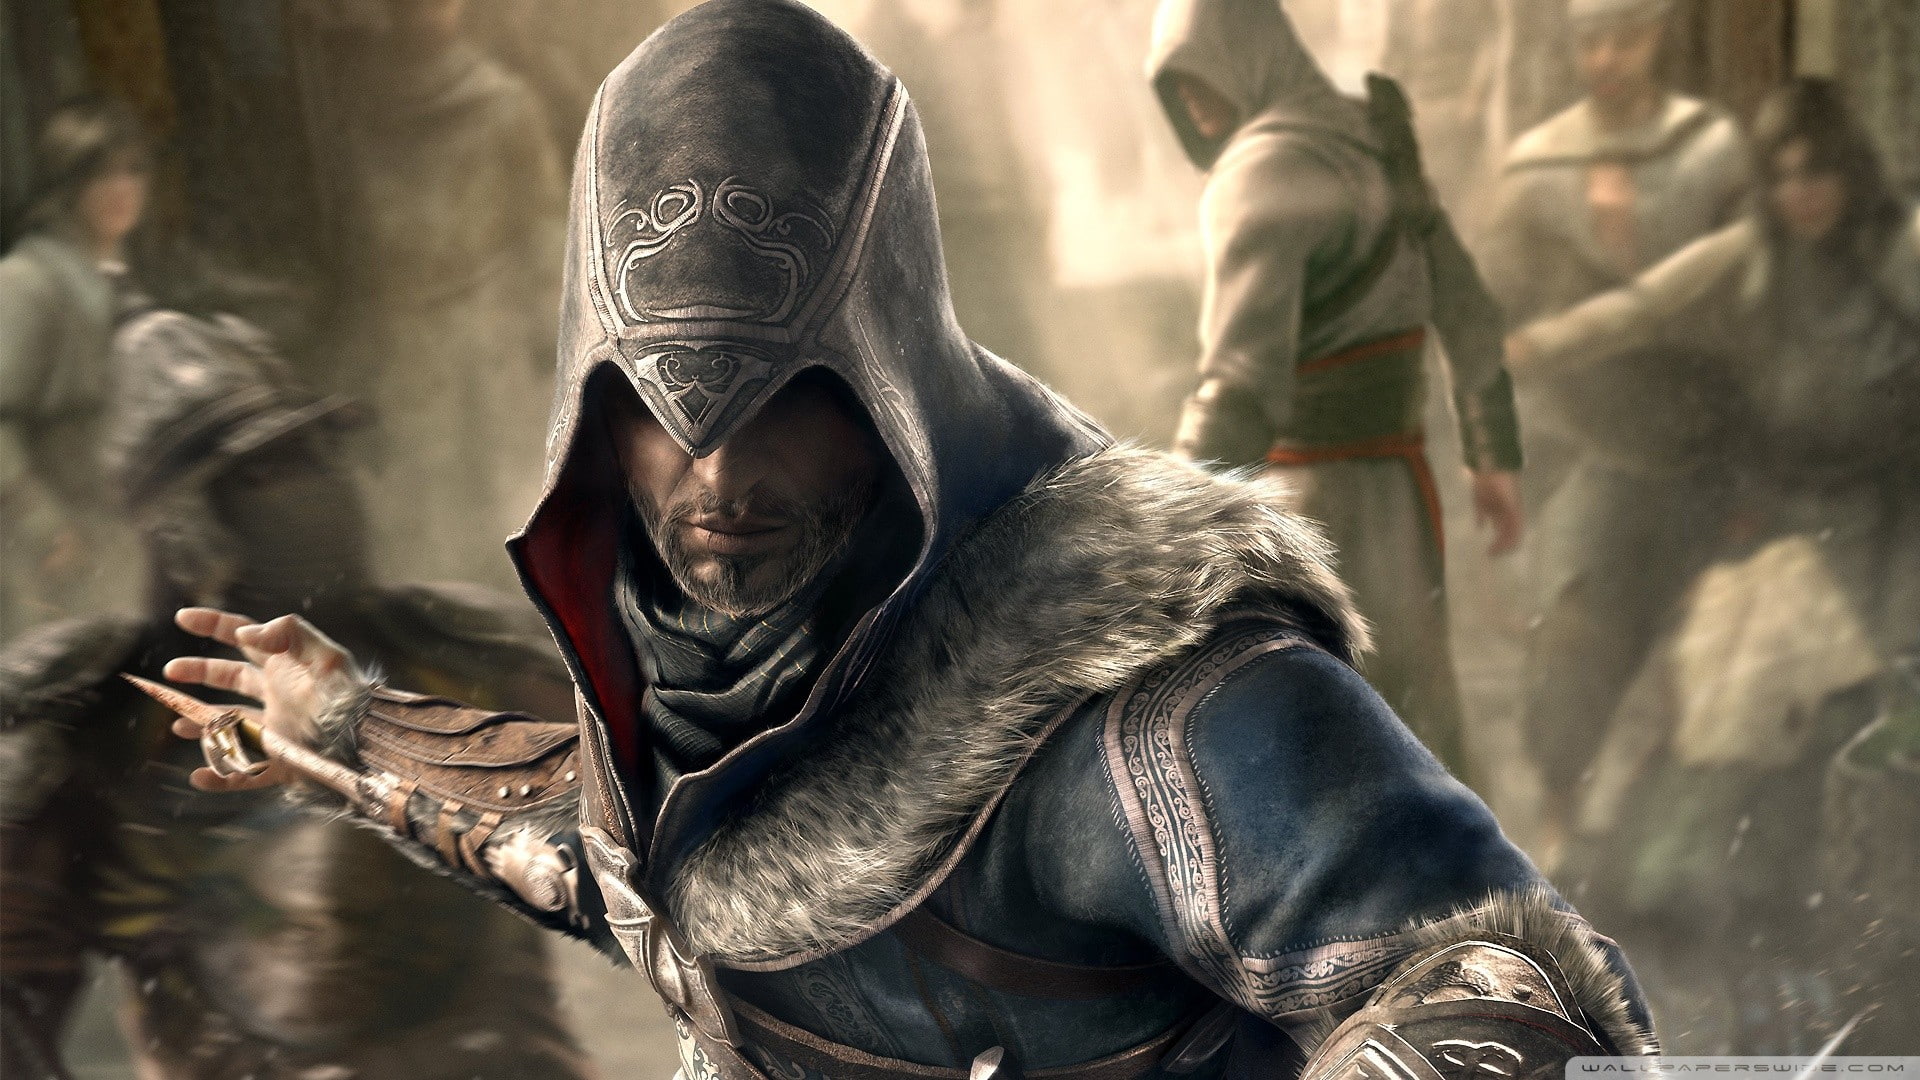 Assassin's Creed, video games, Ezio Auditore da Firenze, Assassin's Creed: Brotherhood